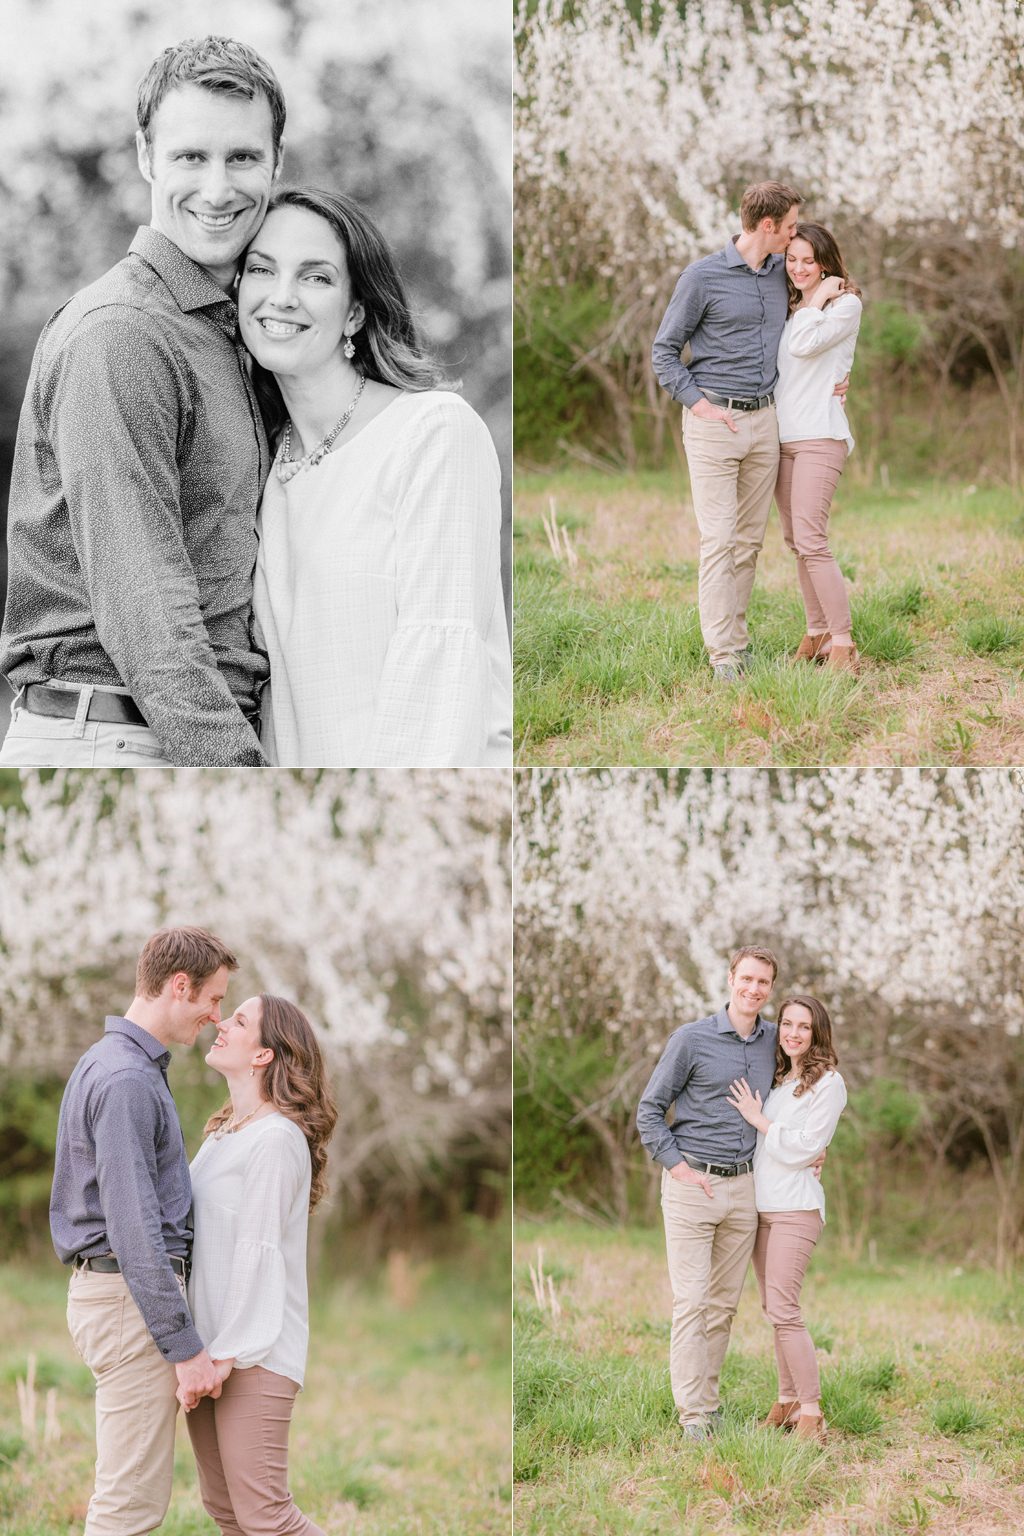 Spring portraits of married couple showing true love in Watkinsville, GA.